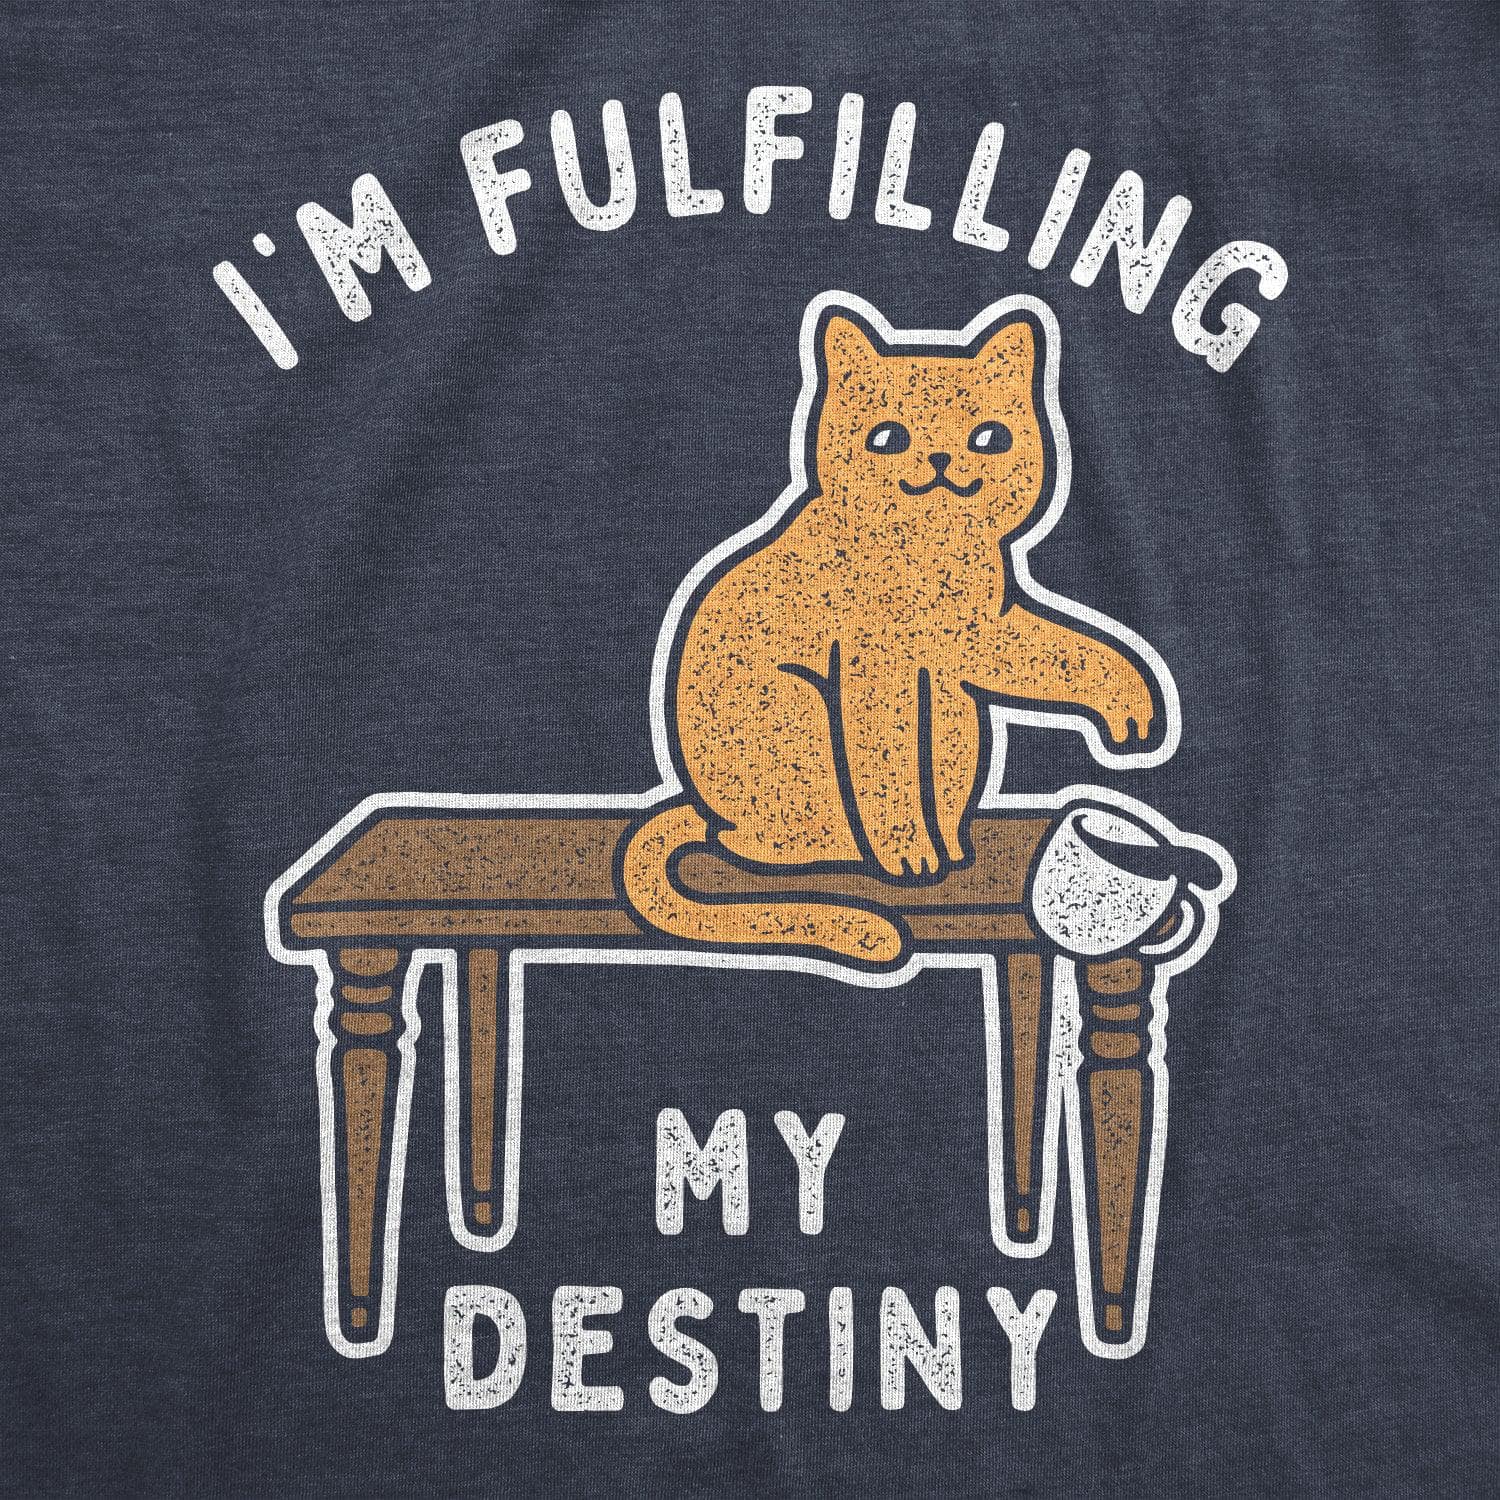 I'm Fulfilling My Destiny Women's Tshirt  -  Crazy Dog T-Shirts